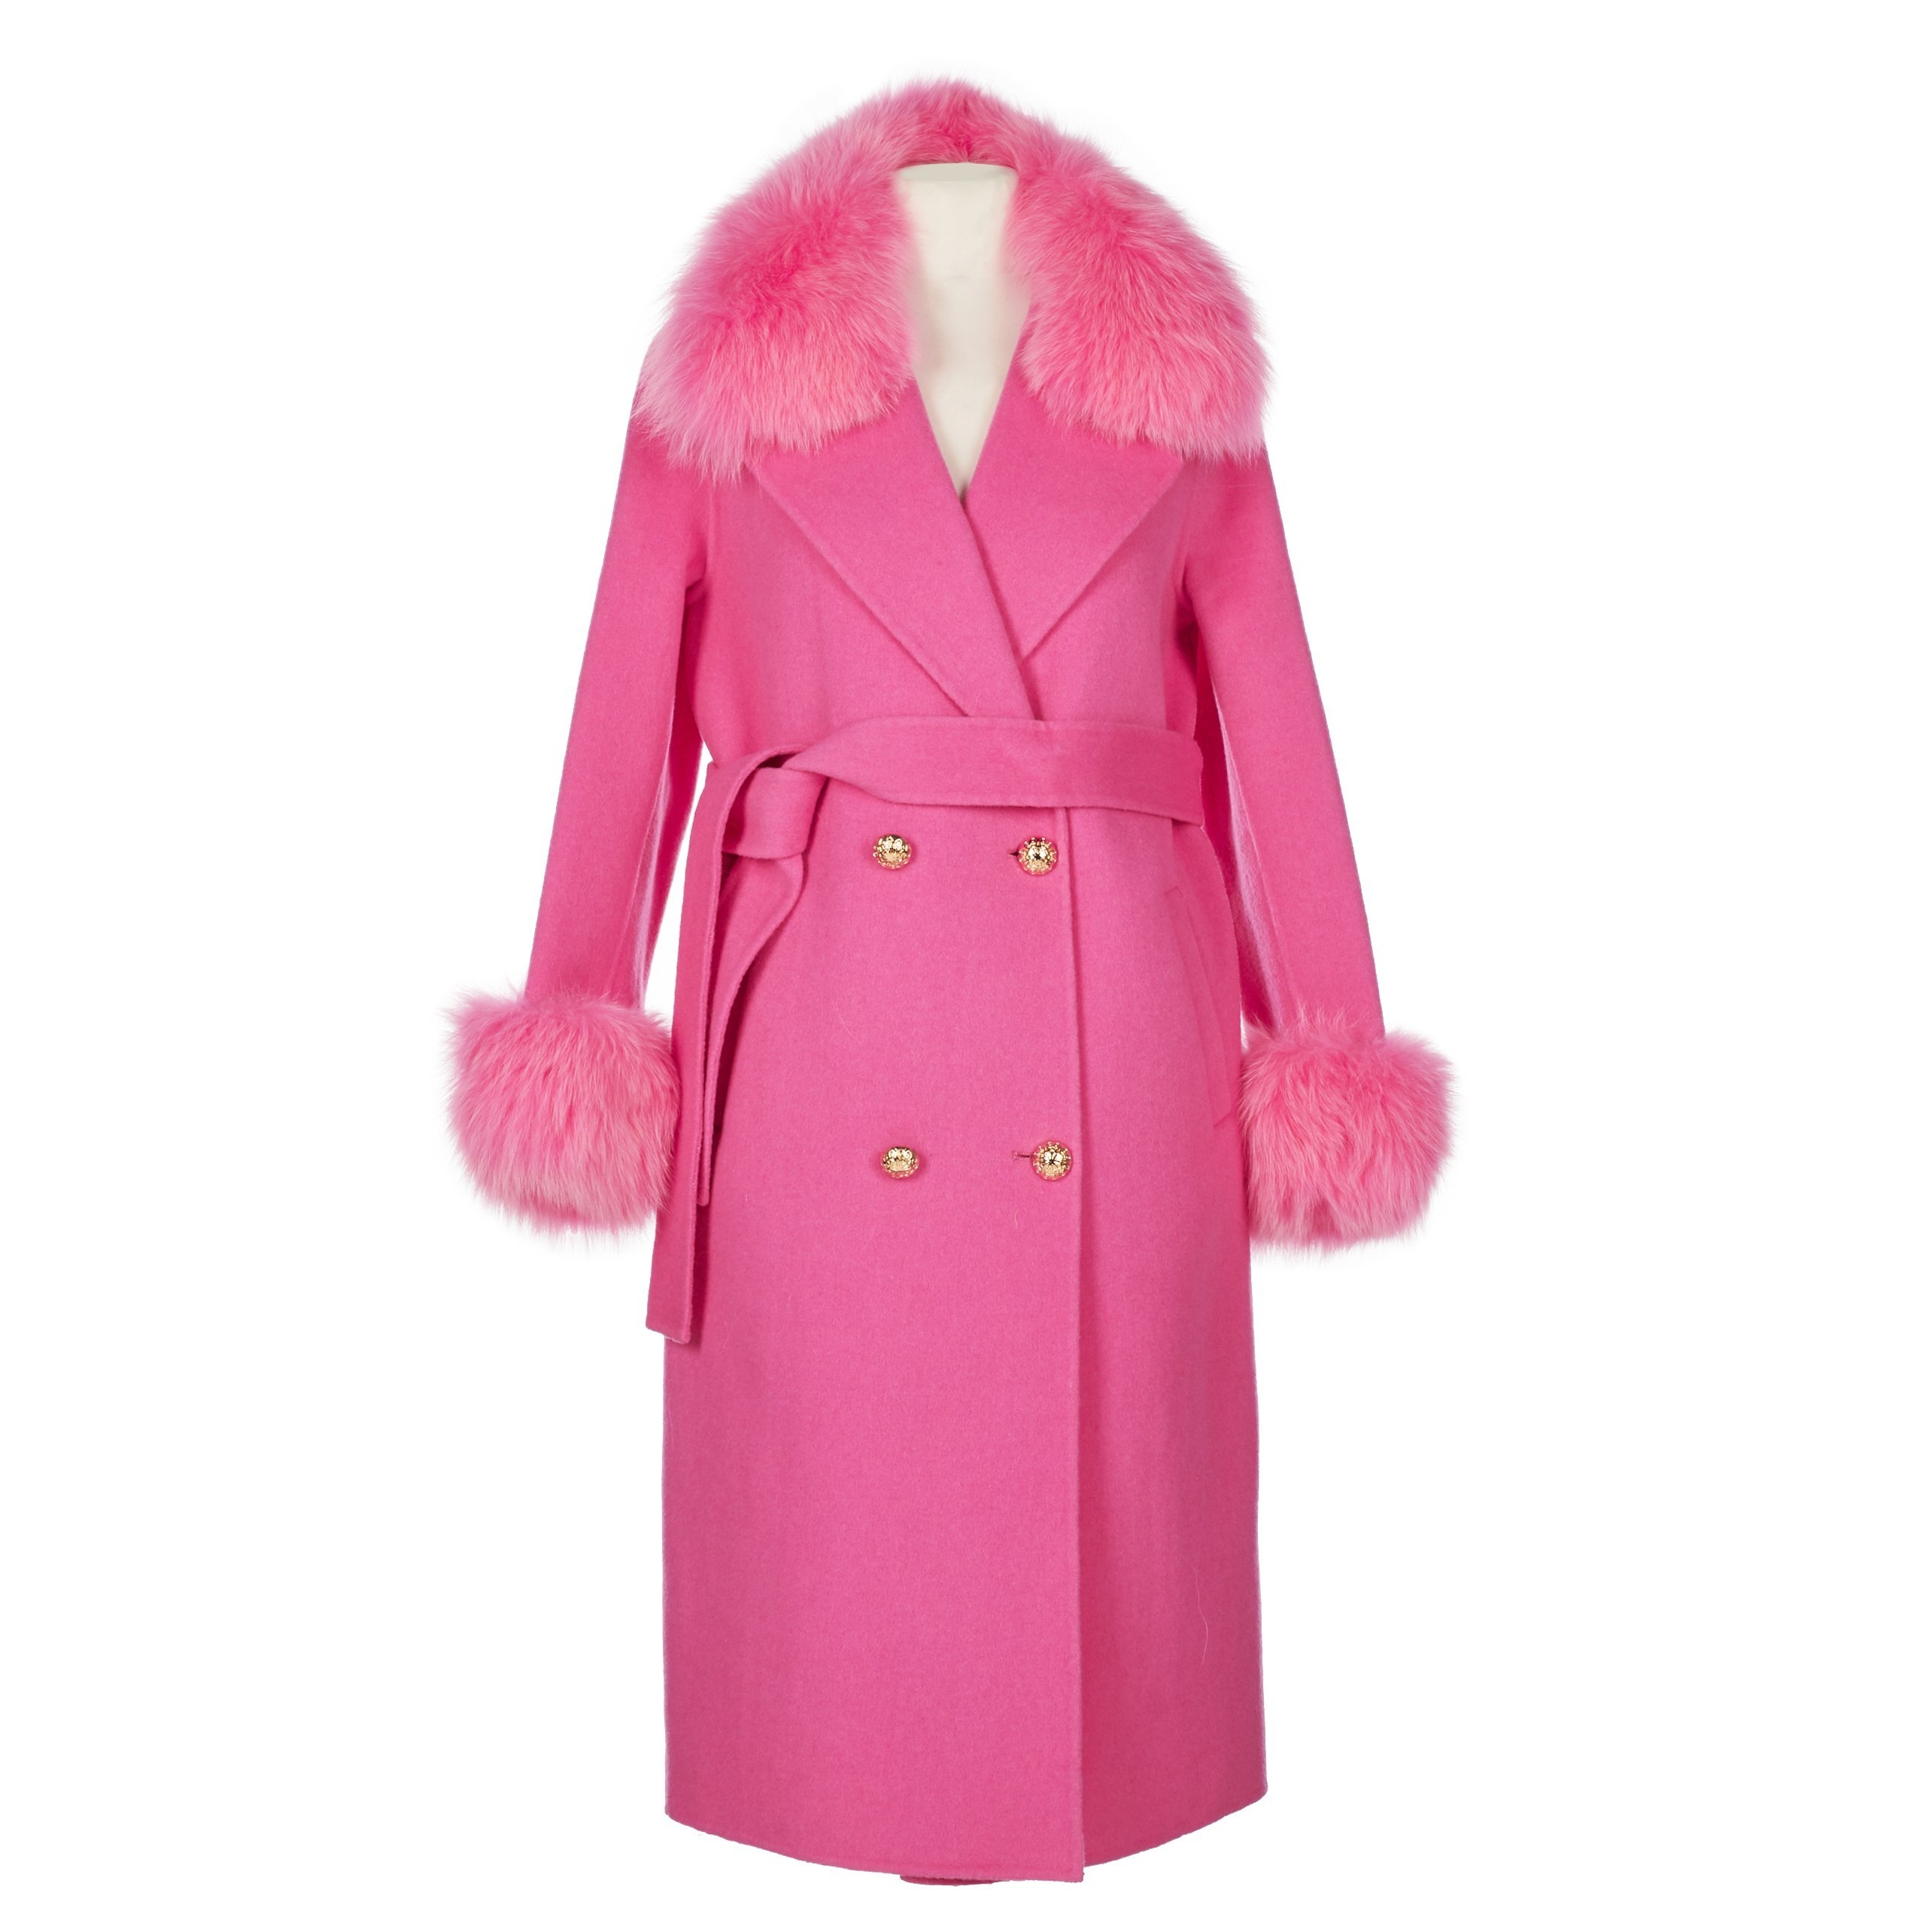 Popski London Hot Pink Cashmere Fox Trim Coat